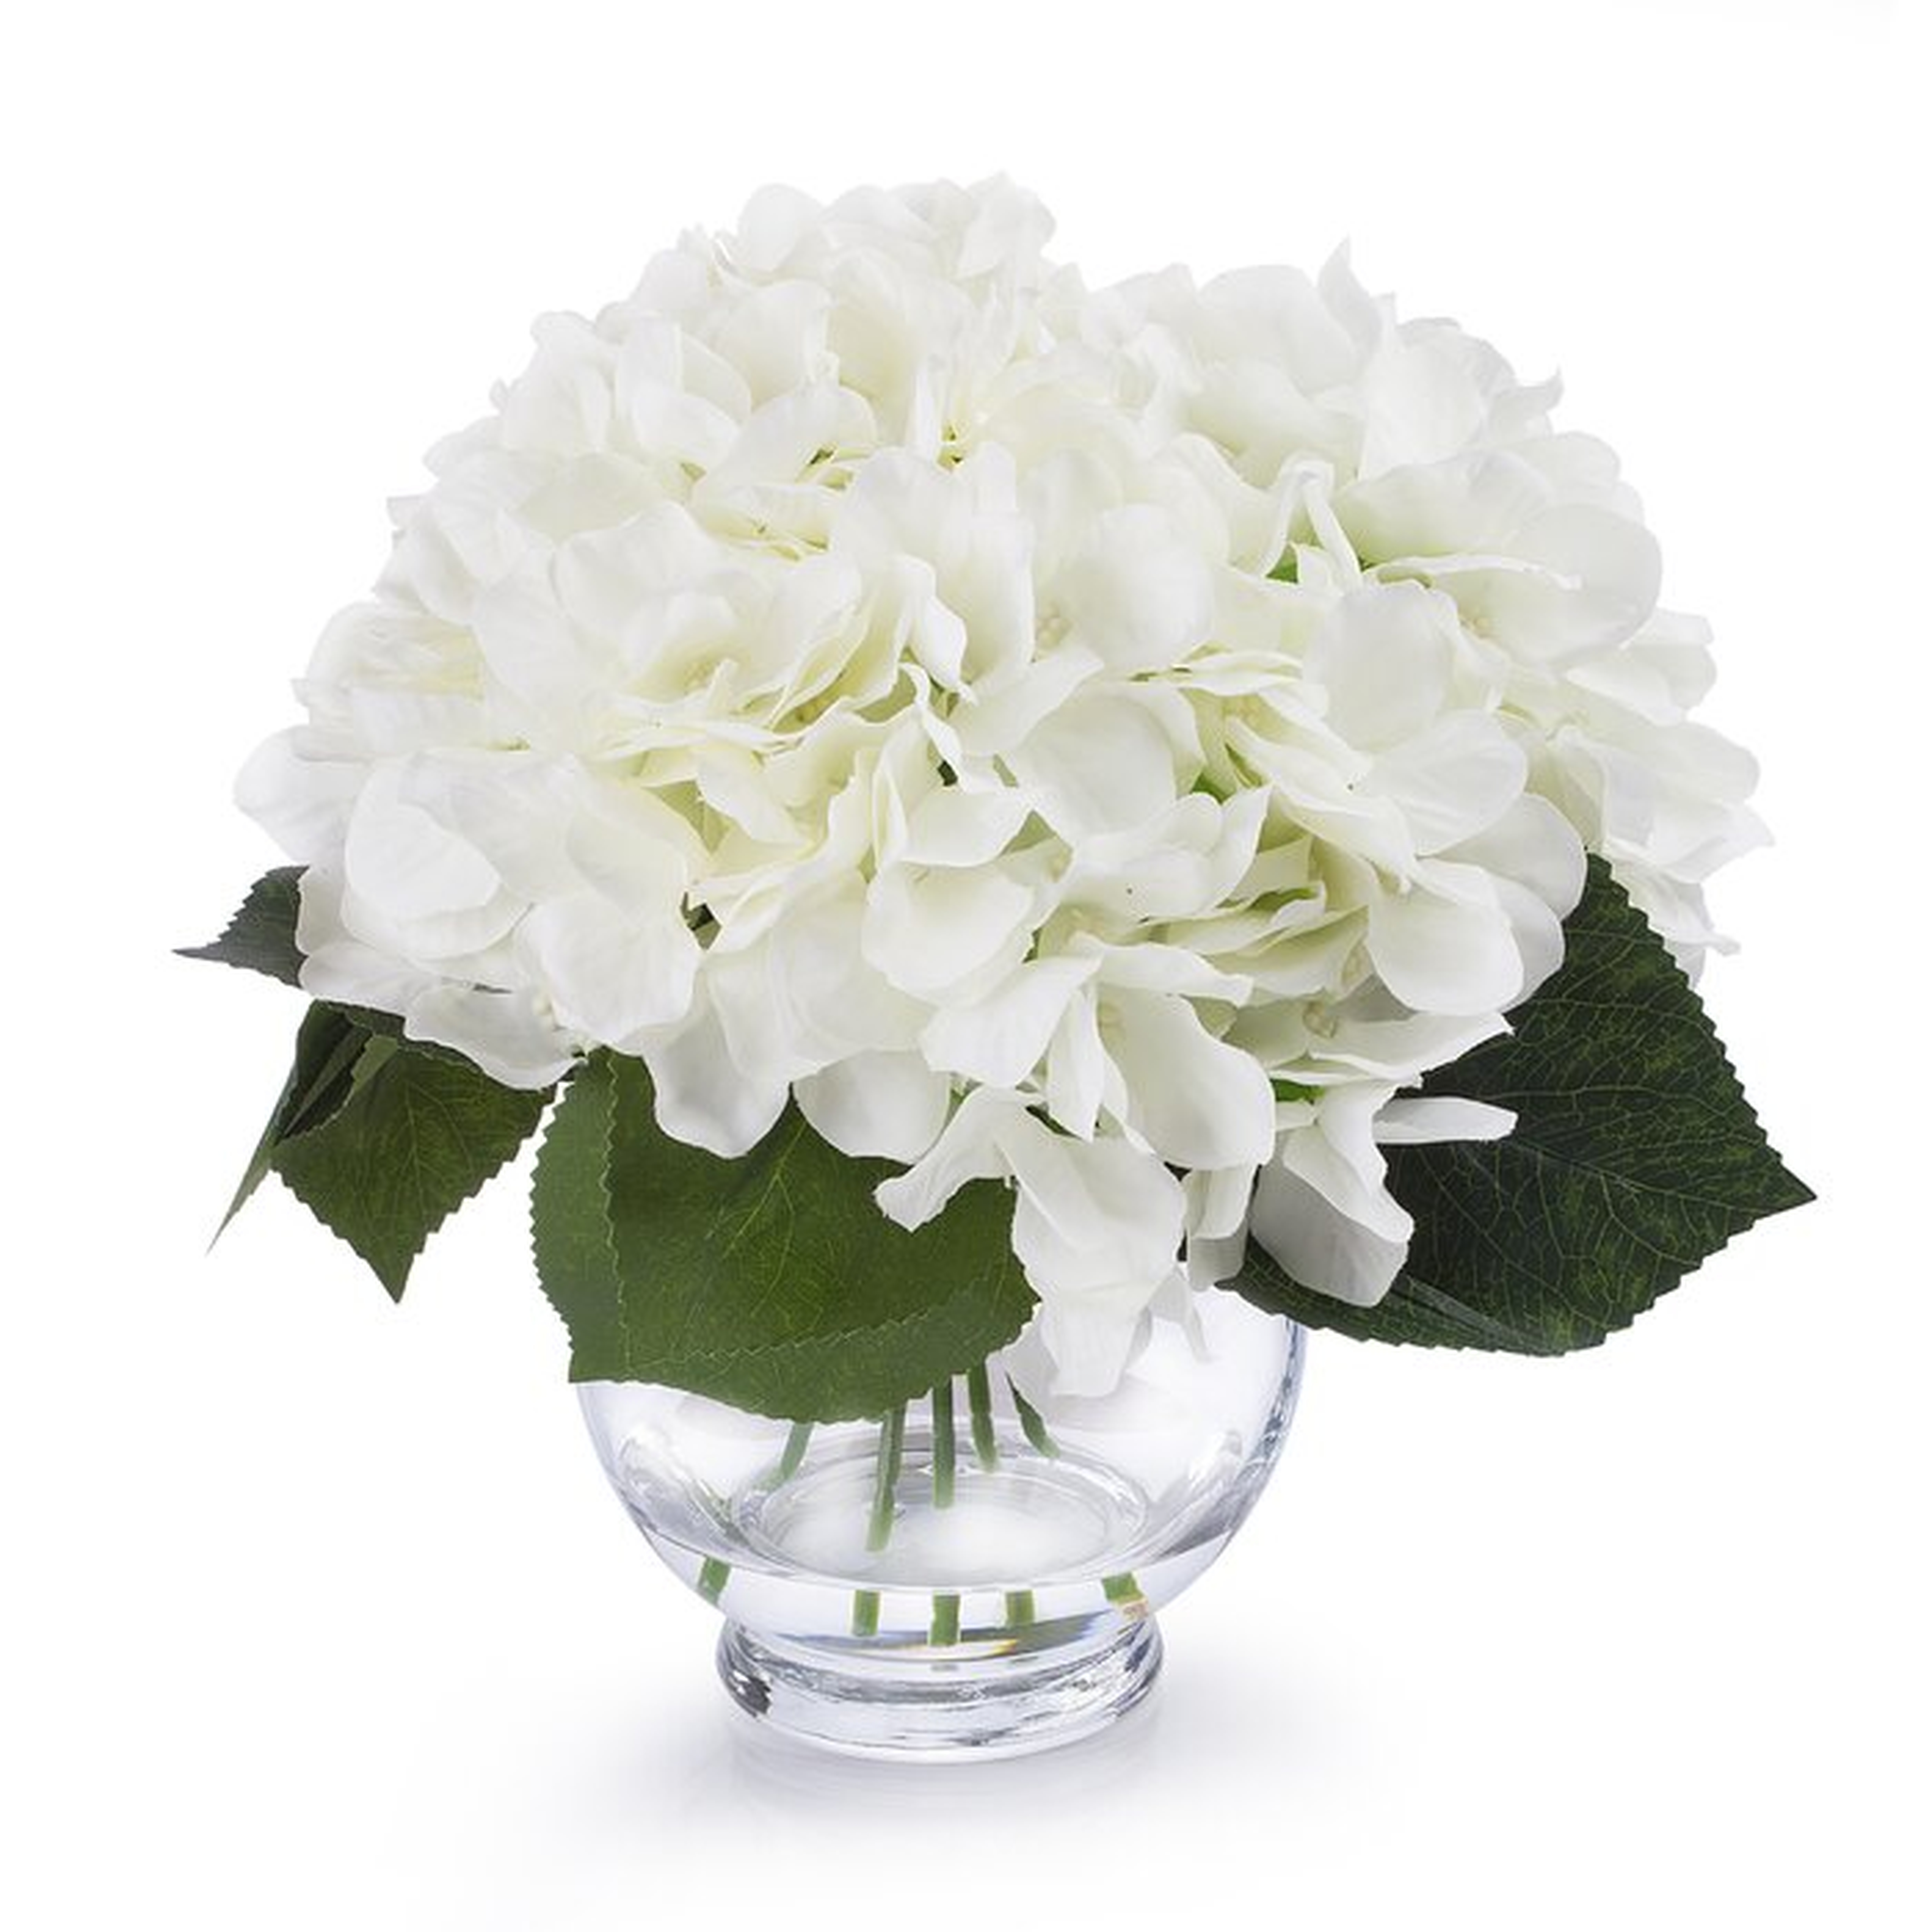 Hydrangea Floral Arrangements in Vase - Wayfair